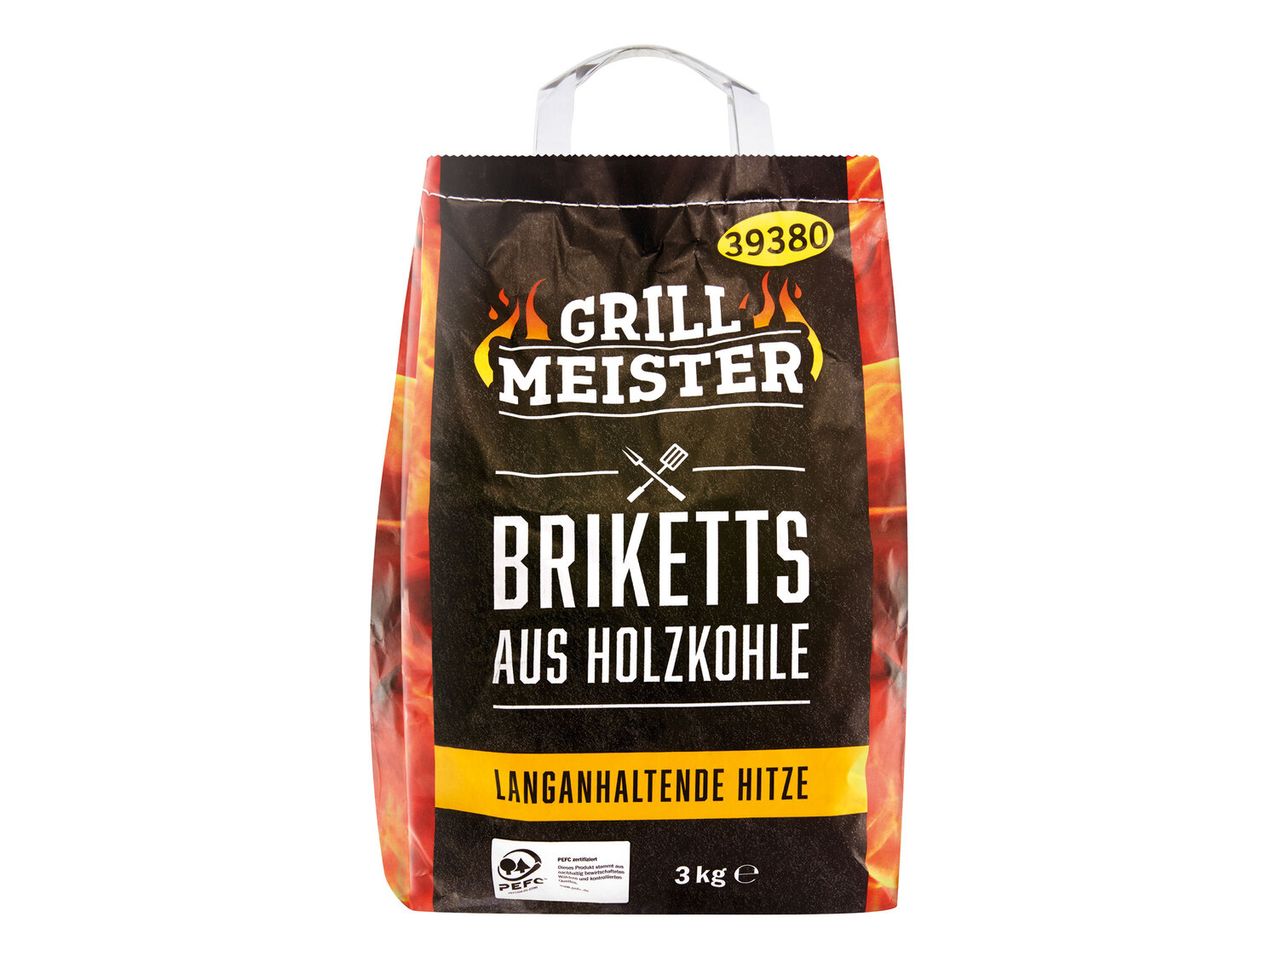 Grillmeister Briketts aus Holzkohle | 